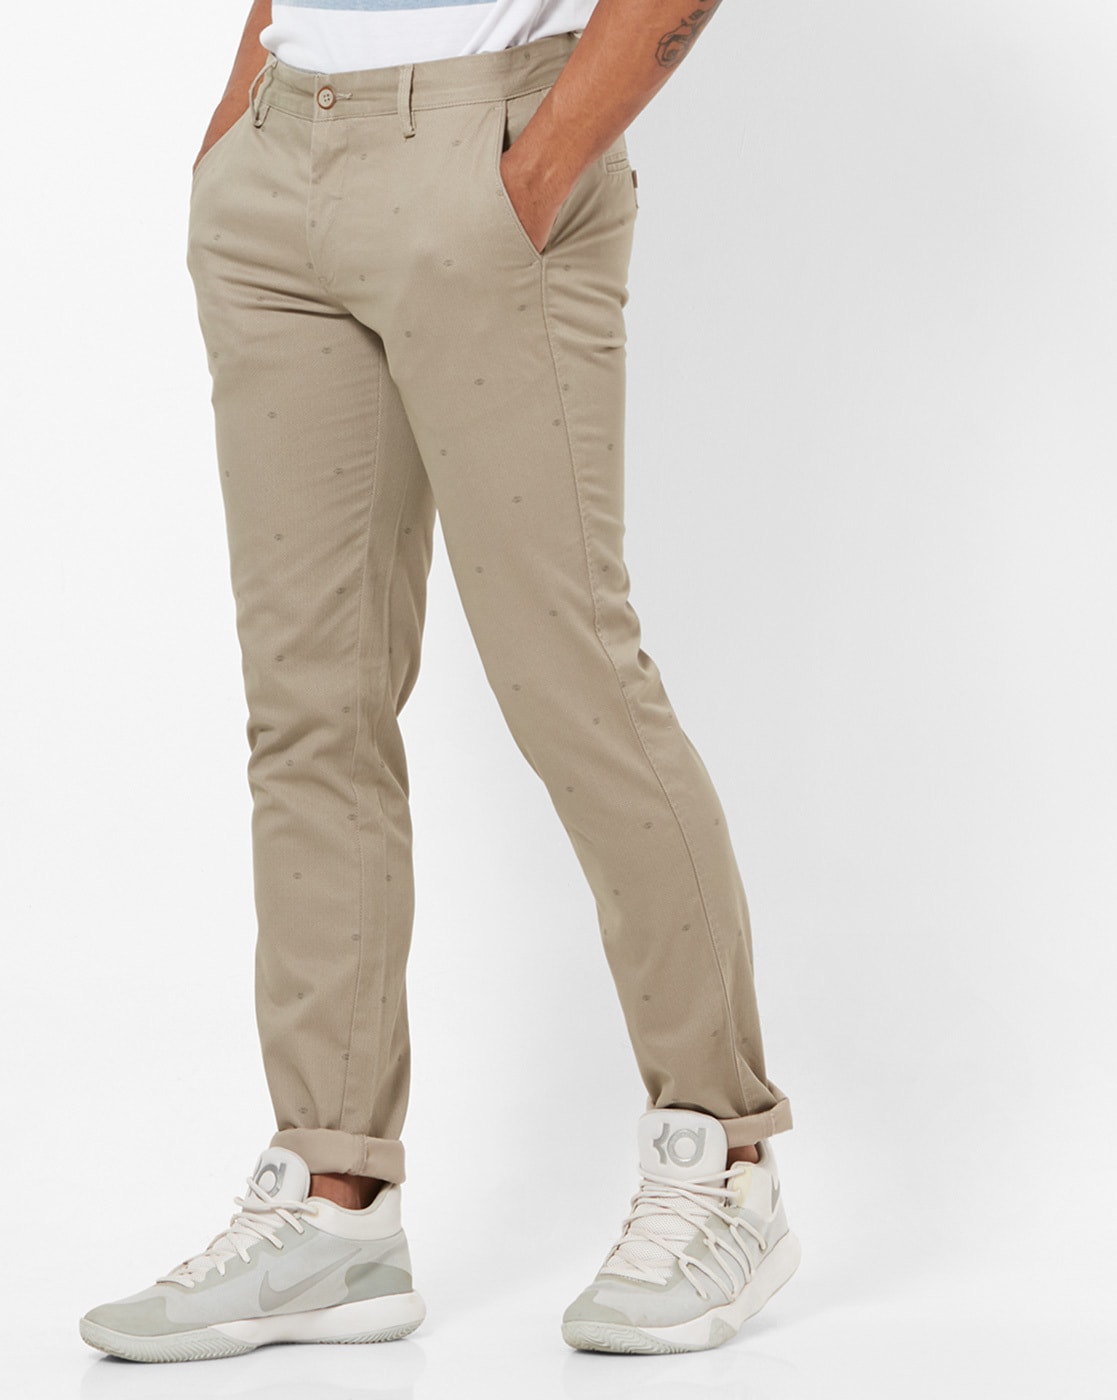 Buy Black Trousers  Pants for Men by Arrow Newyork Online  Ajiocom